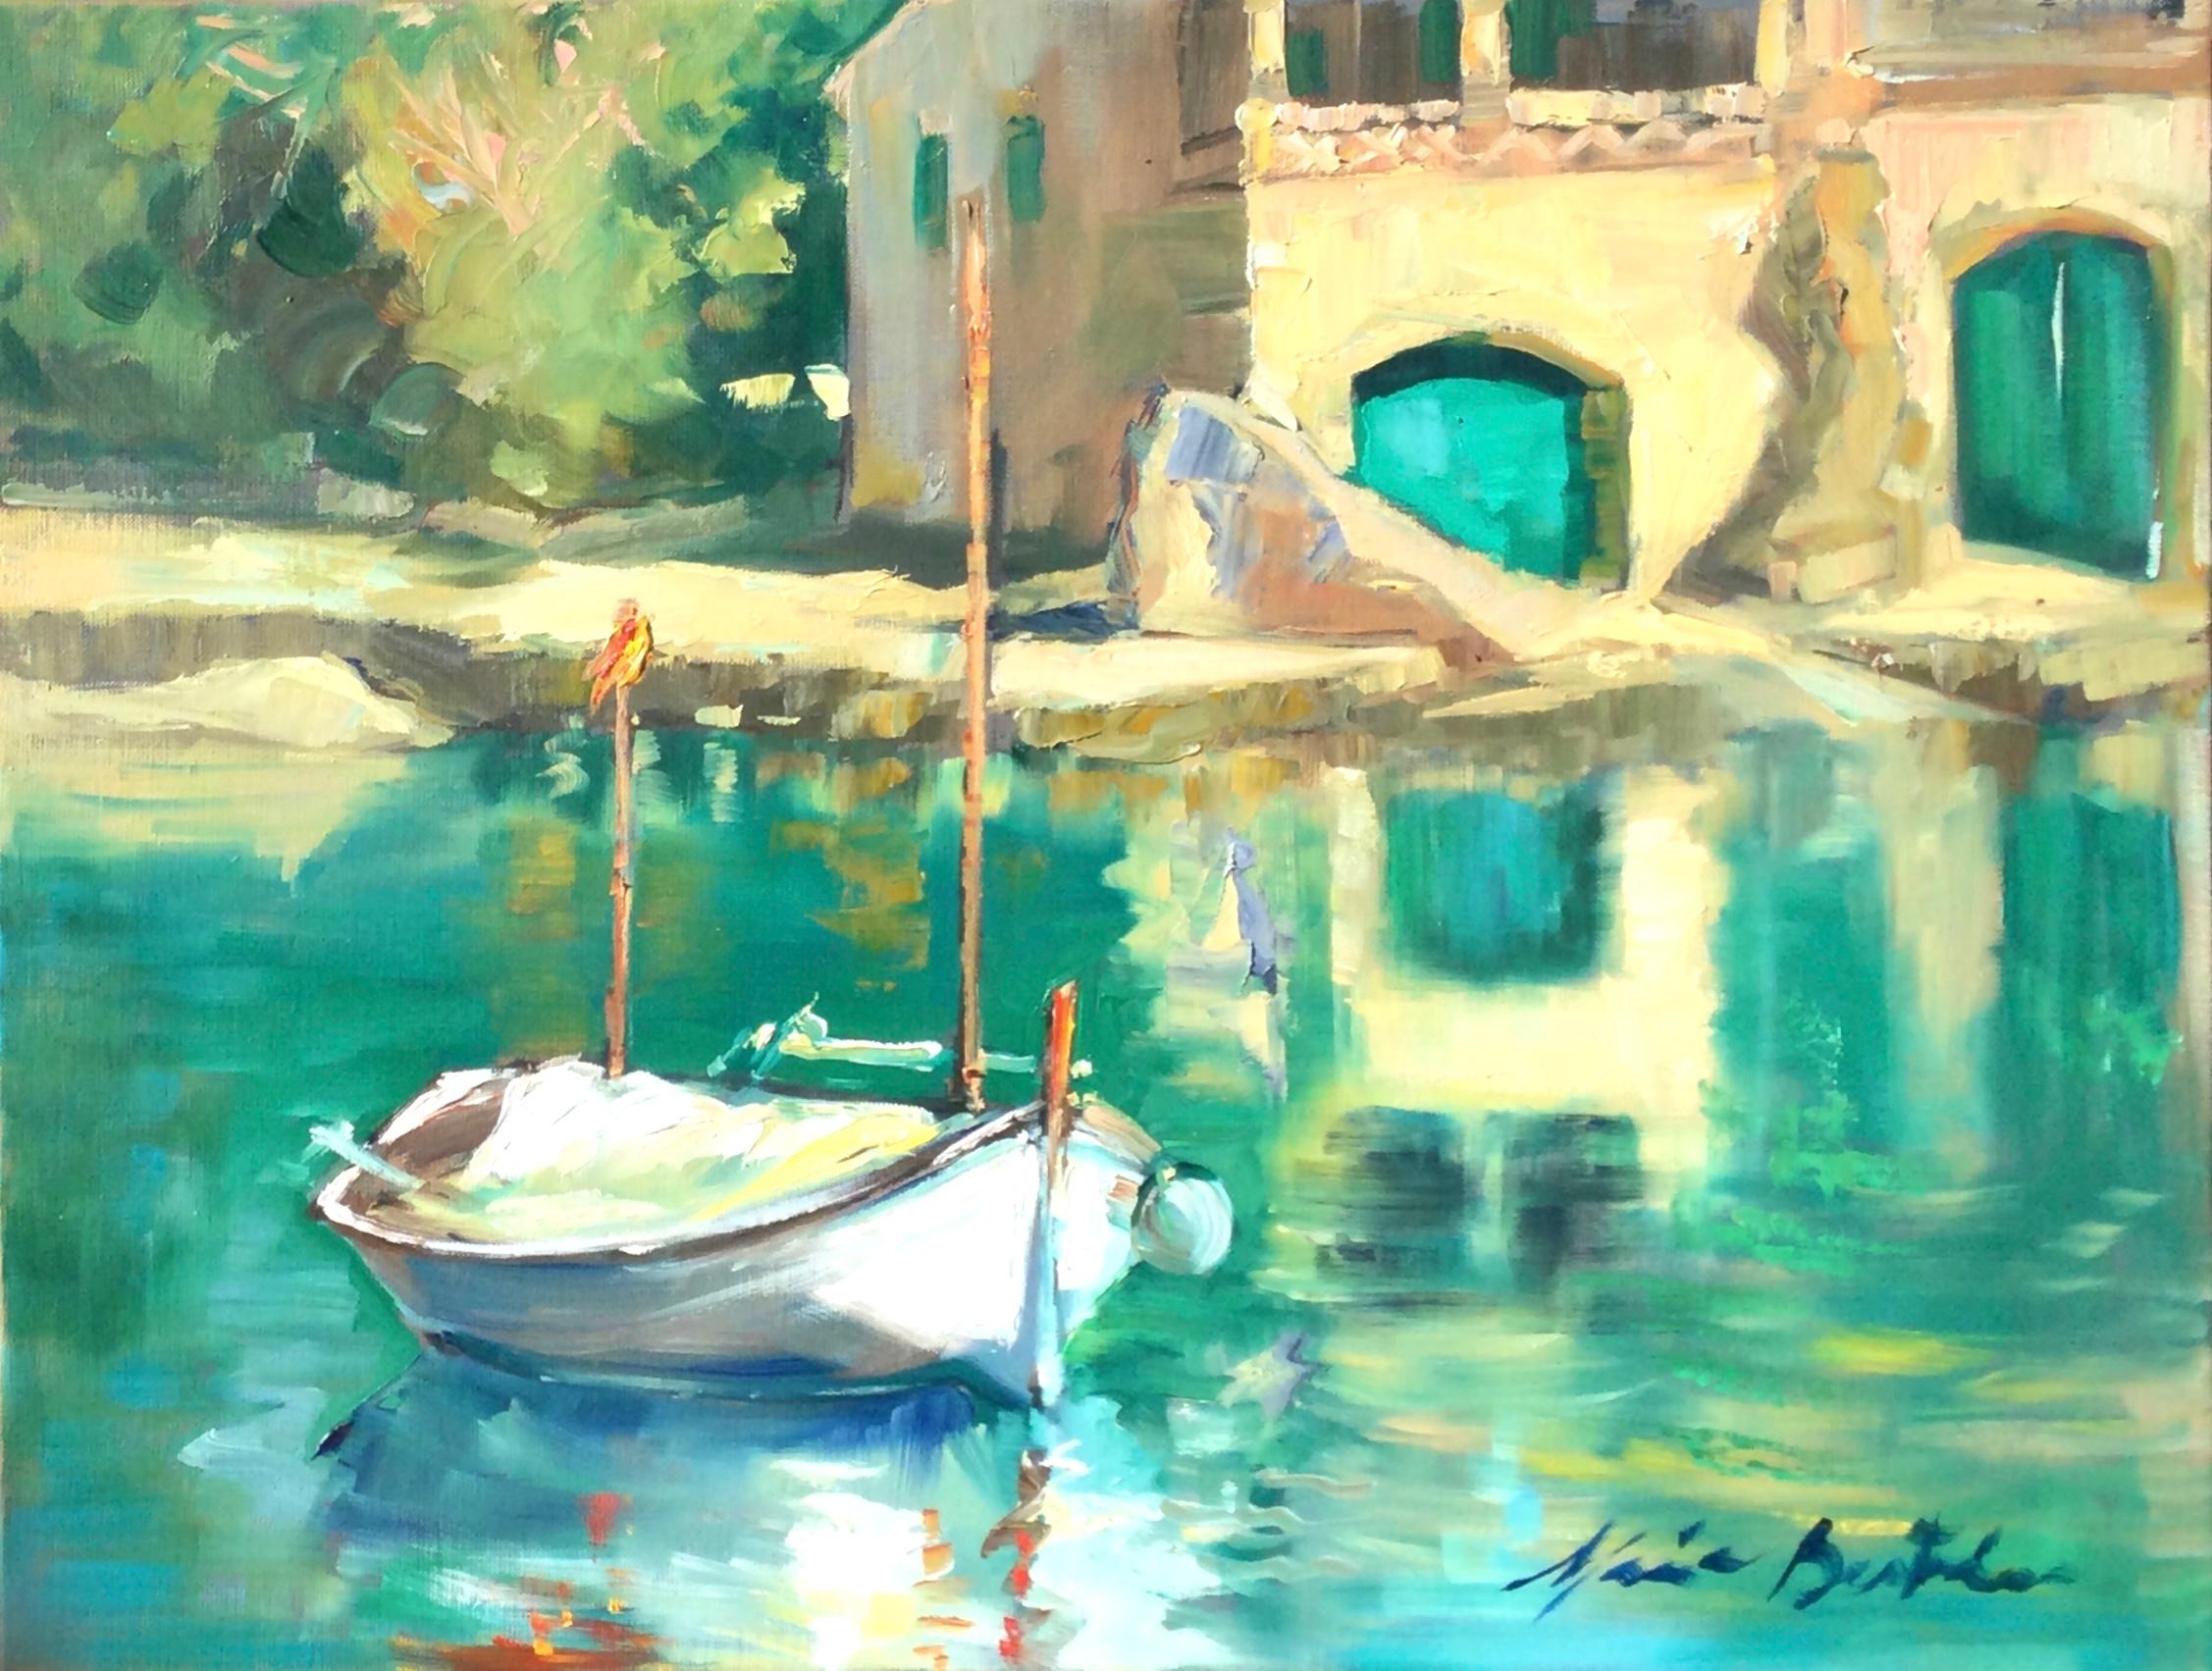 Landscape Painting Maria Bertrán - « In Cala Bora », huile impressionniste contemporaine de Majorque, Espagne